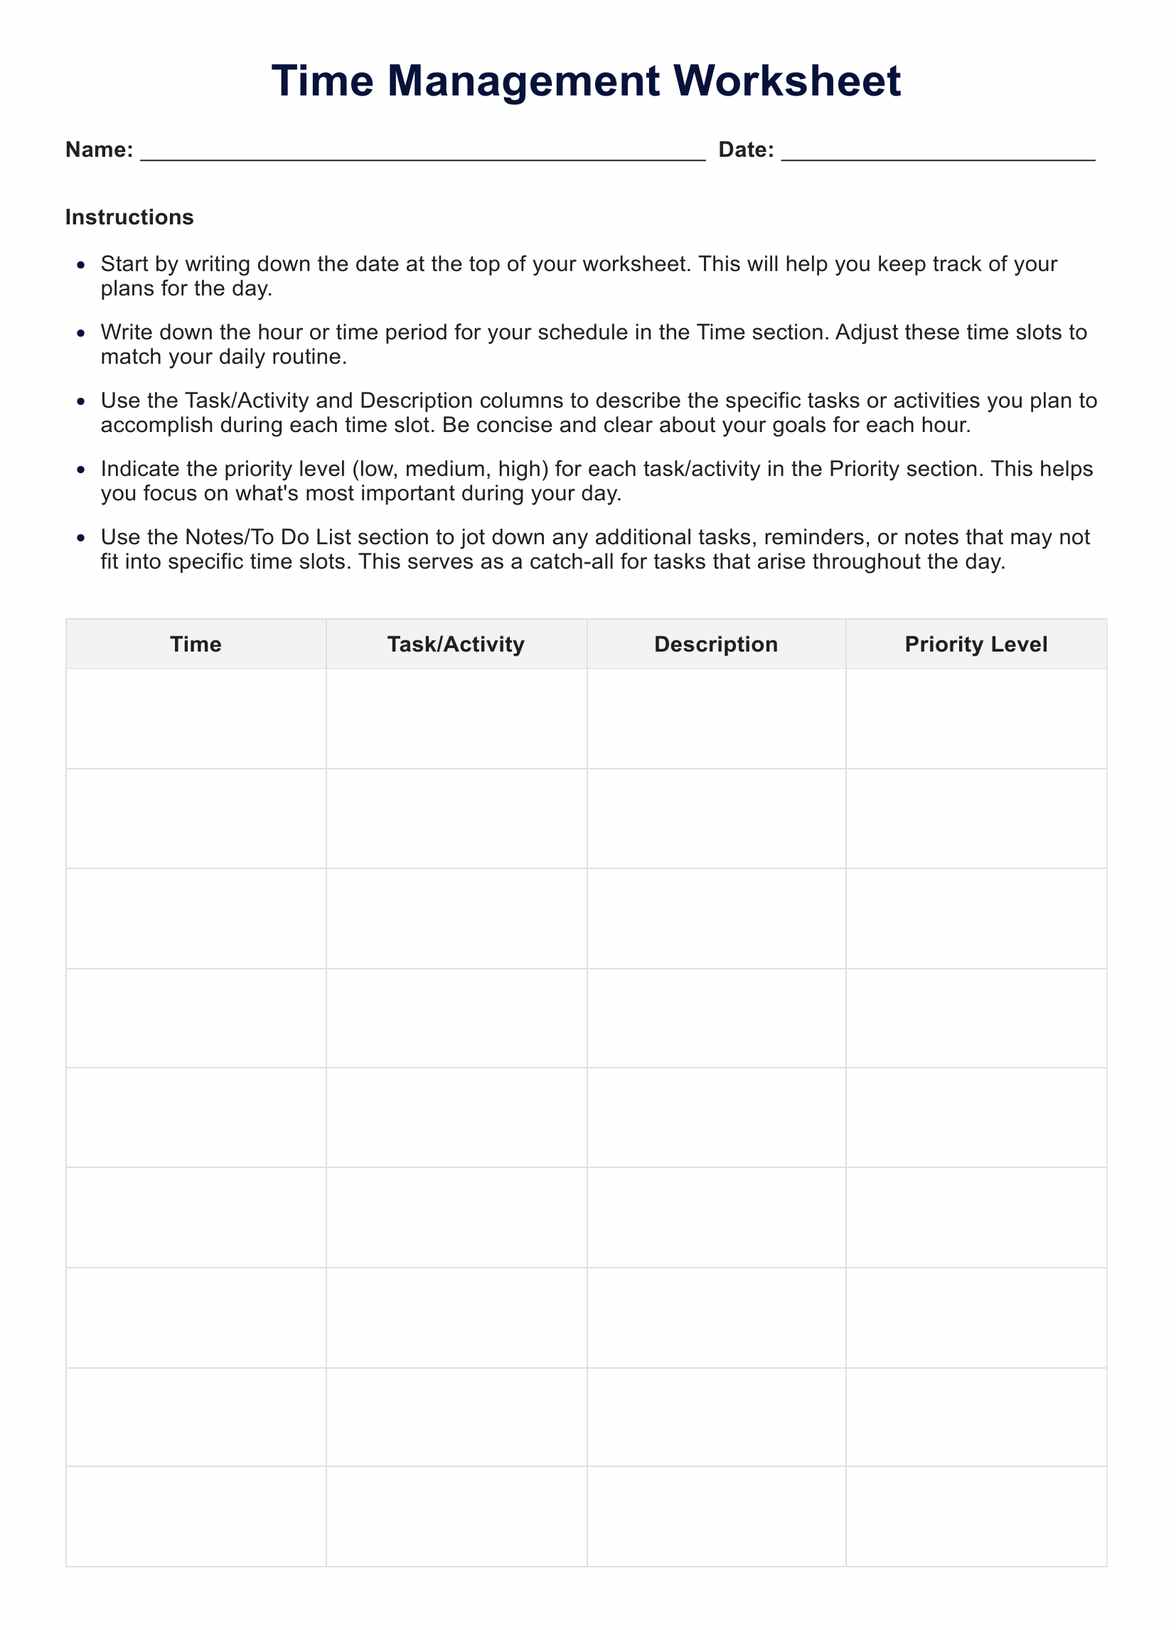 Time Management Worksheets PDF Example